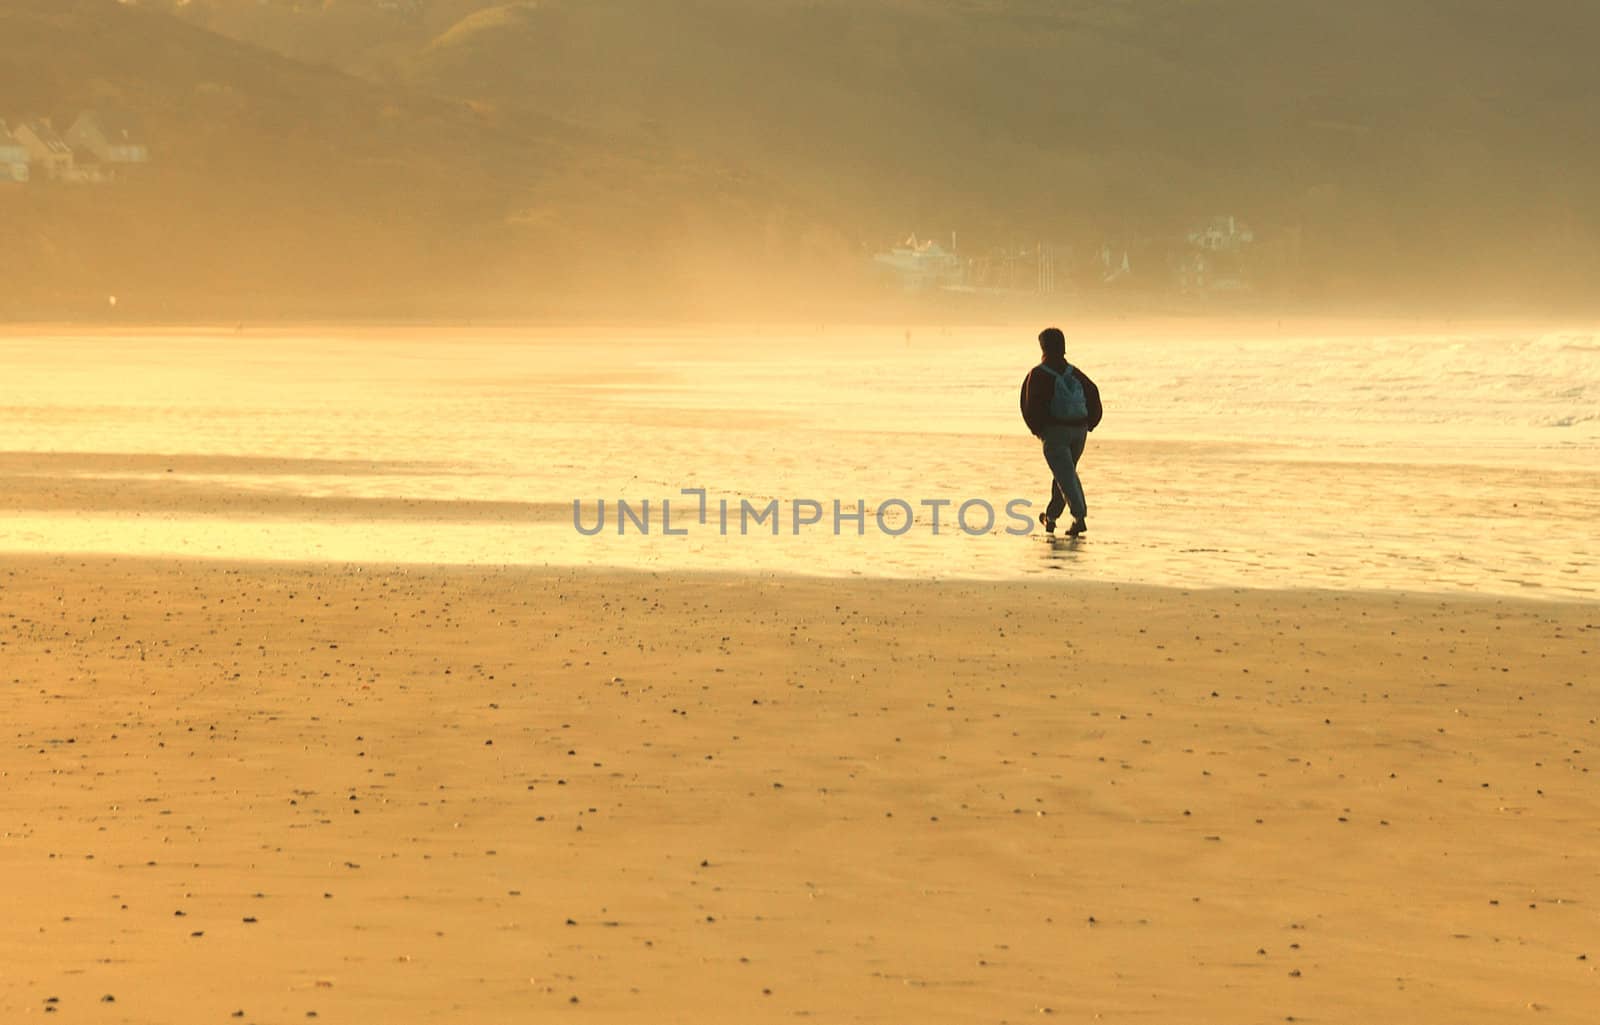 A man walking alone on a beach by BZH22